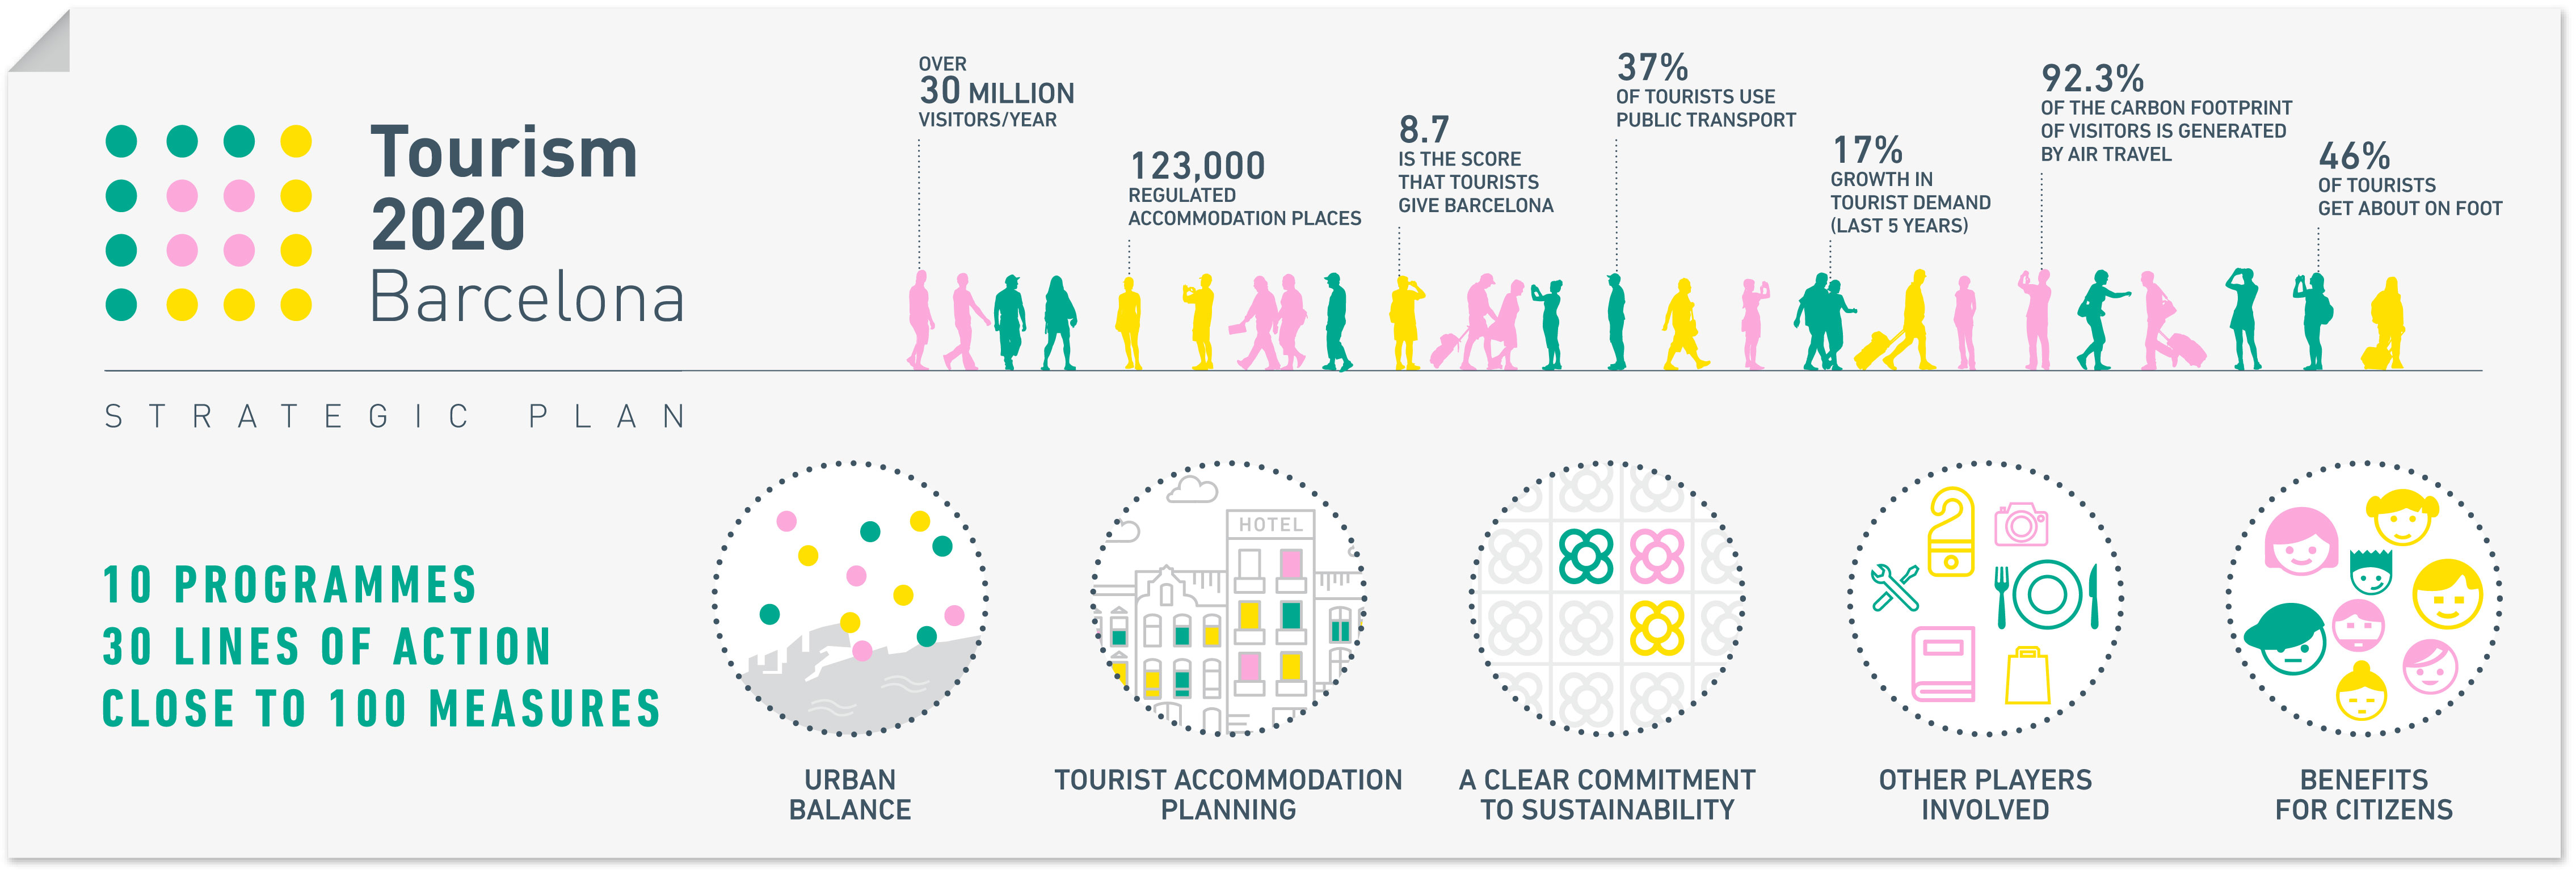 barcelona strategic tourism plan 2020